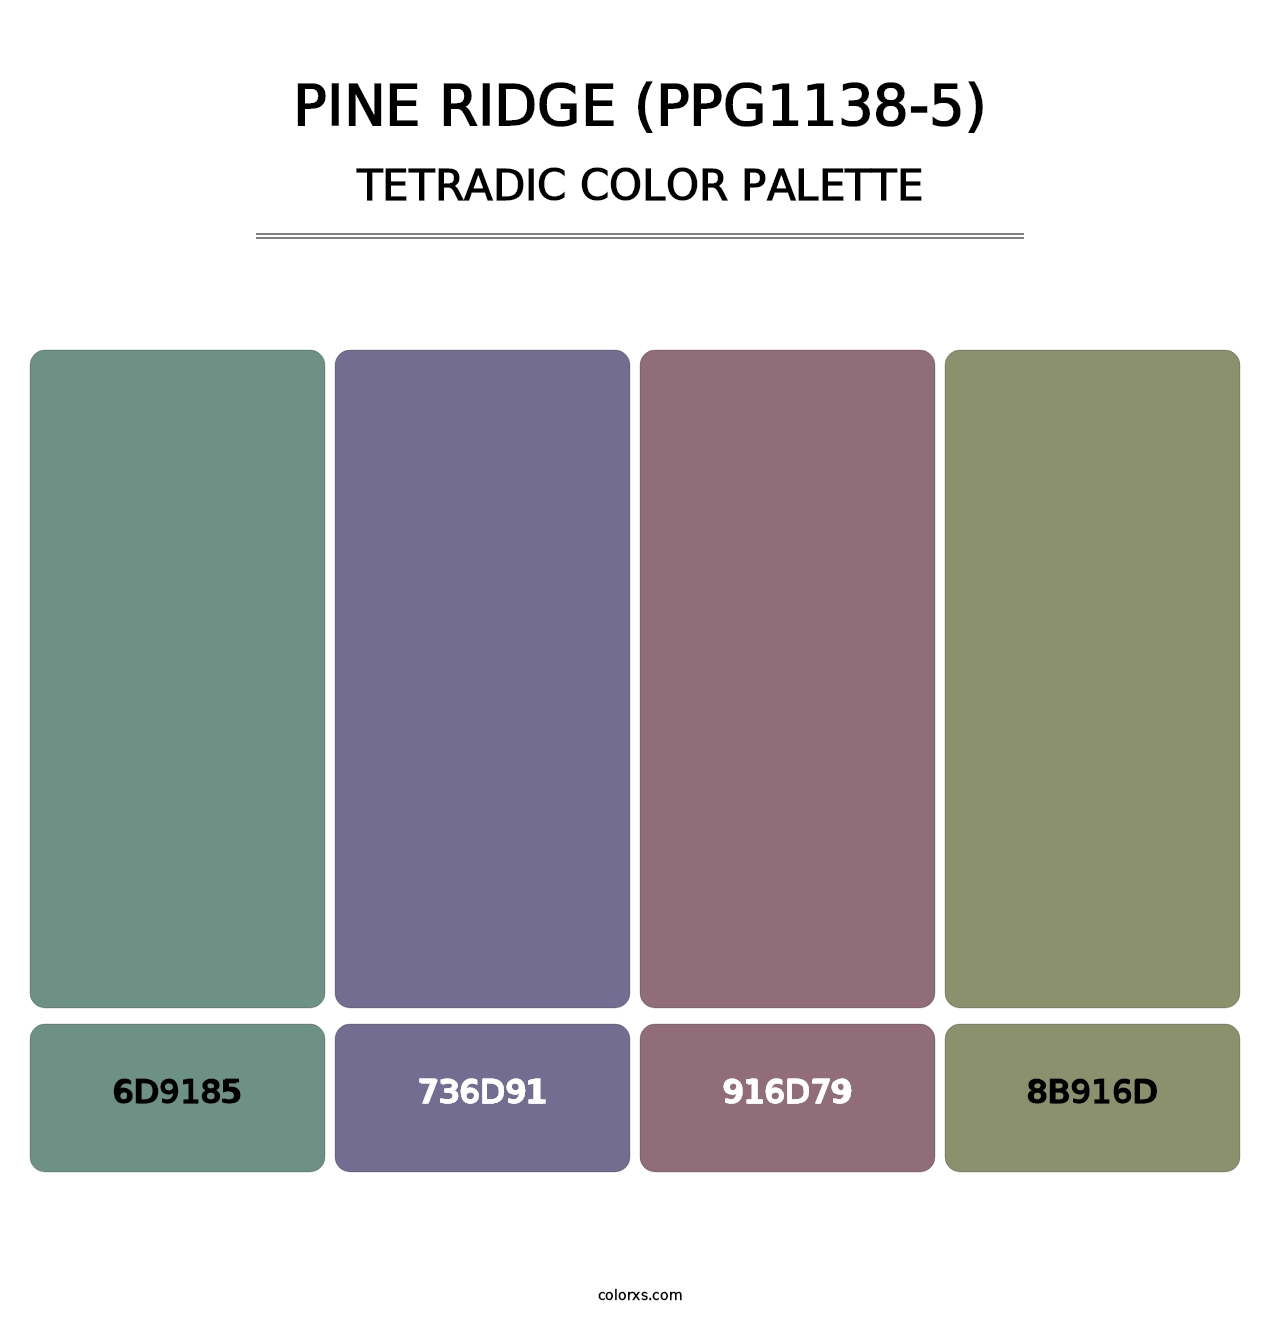 Pine Ridge (PPG1138-5) - Tetradic Color Palette